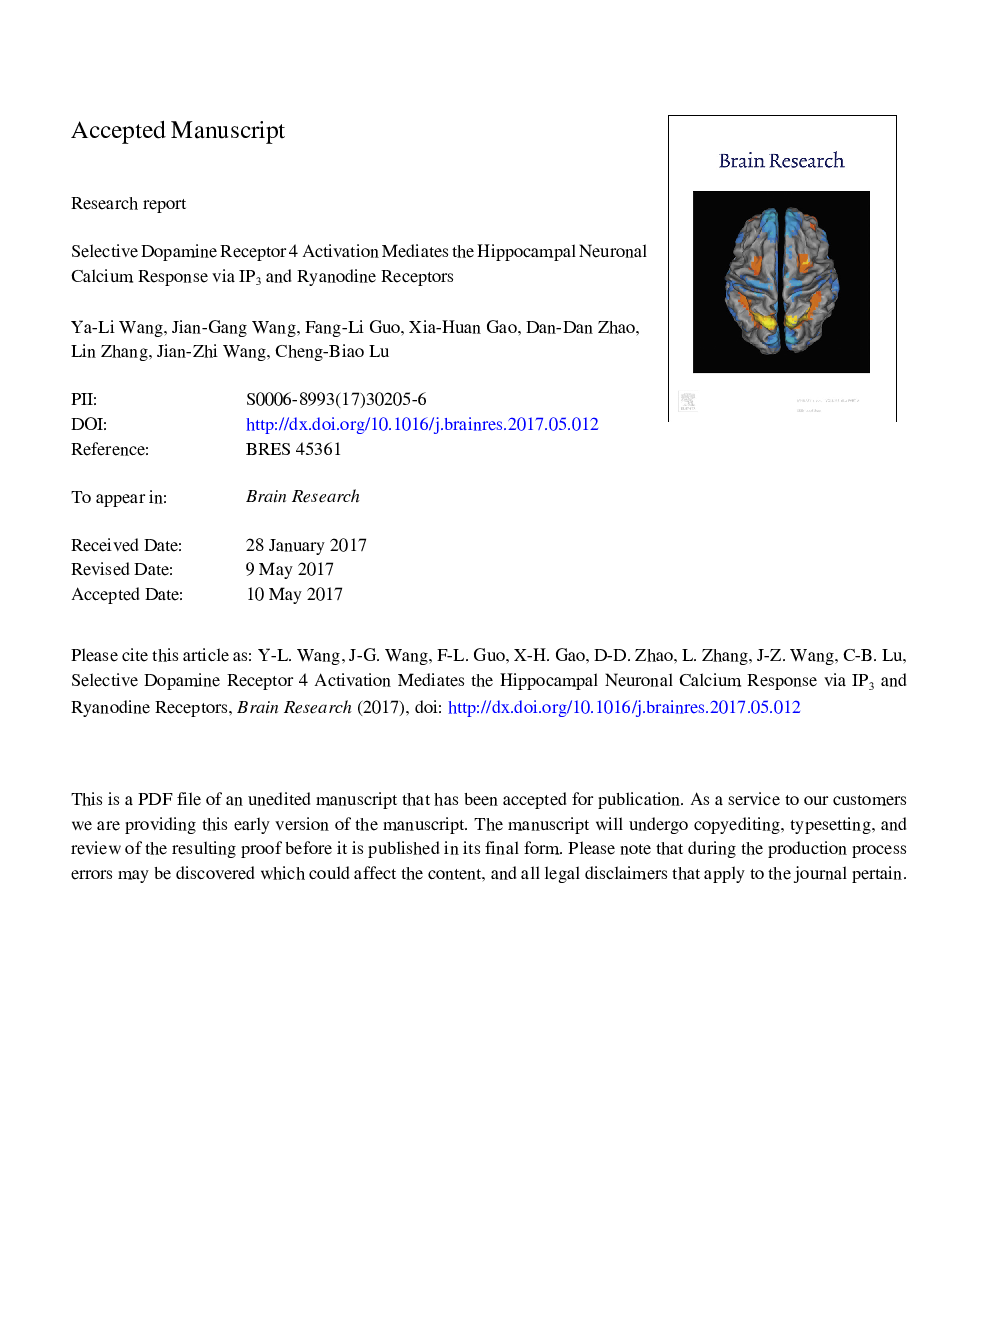 Selective dopamine receptor 4 activation mediates the hippocampal neuronal calcium response via IP3 and ryanodine receptors